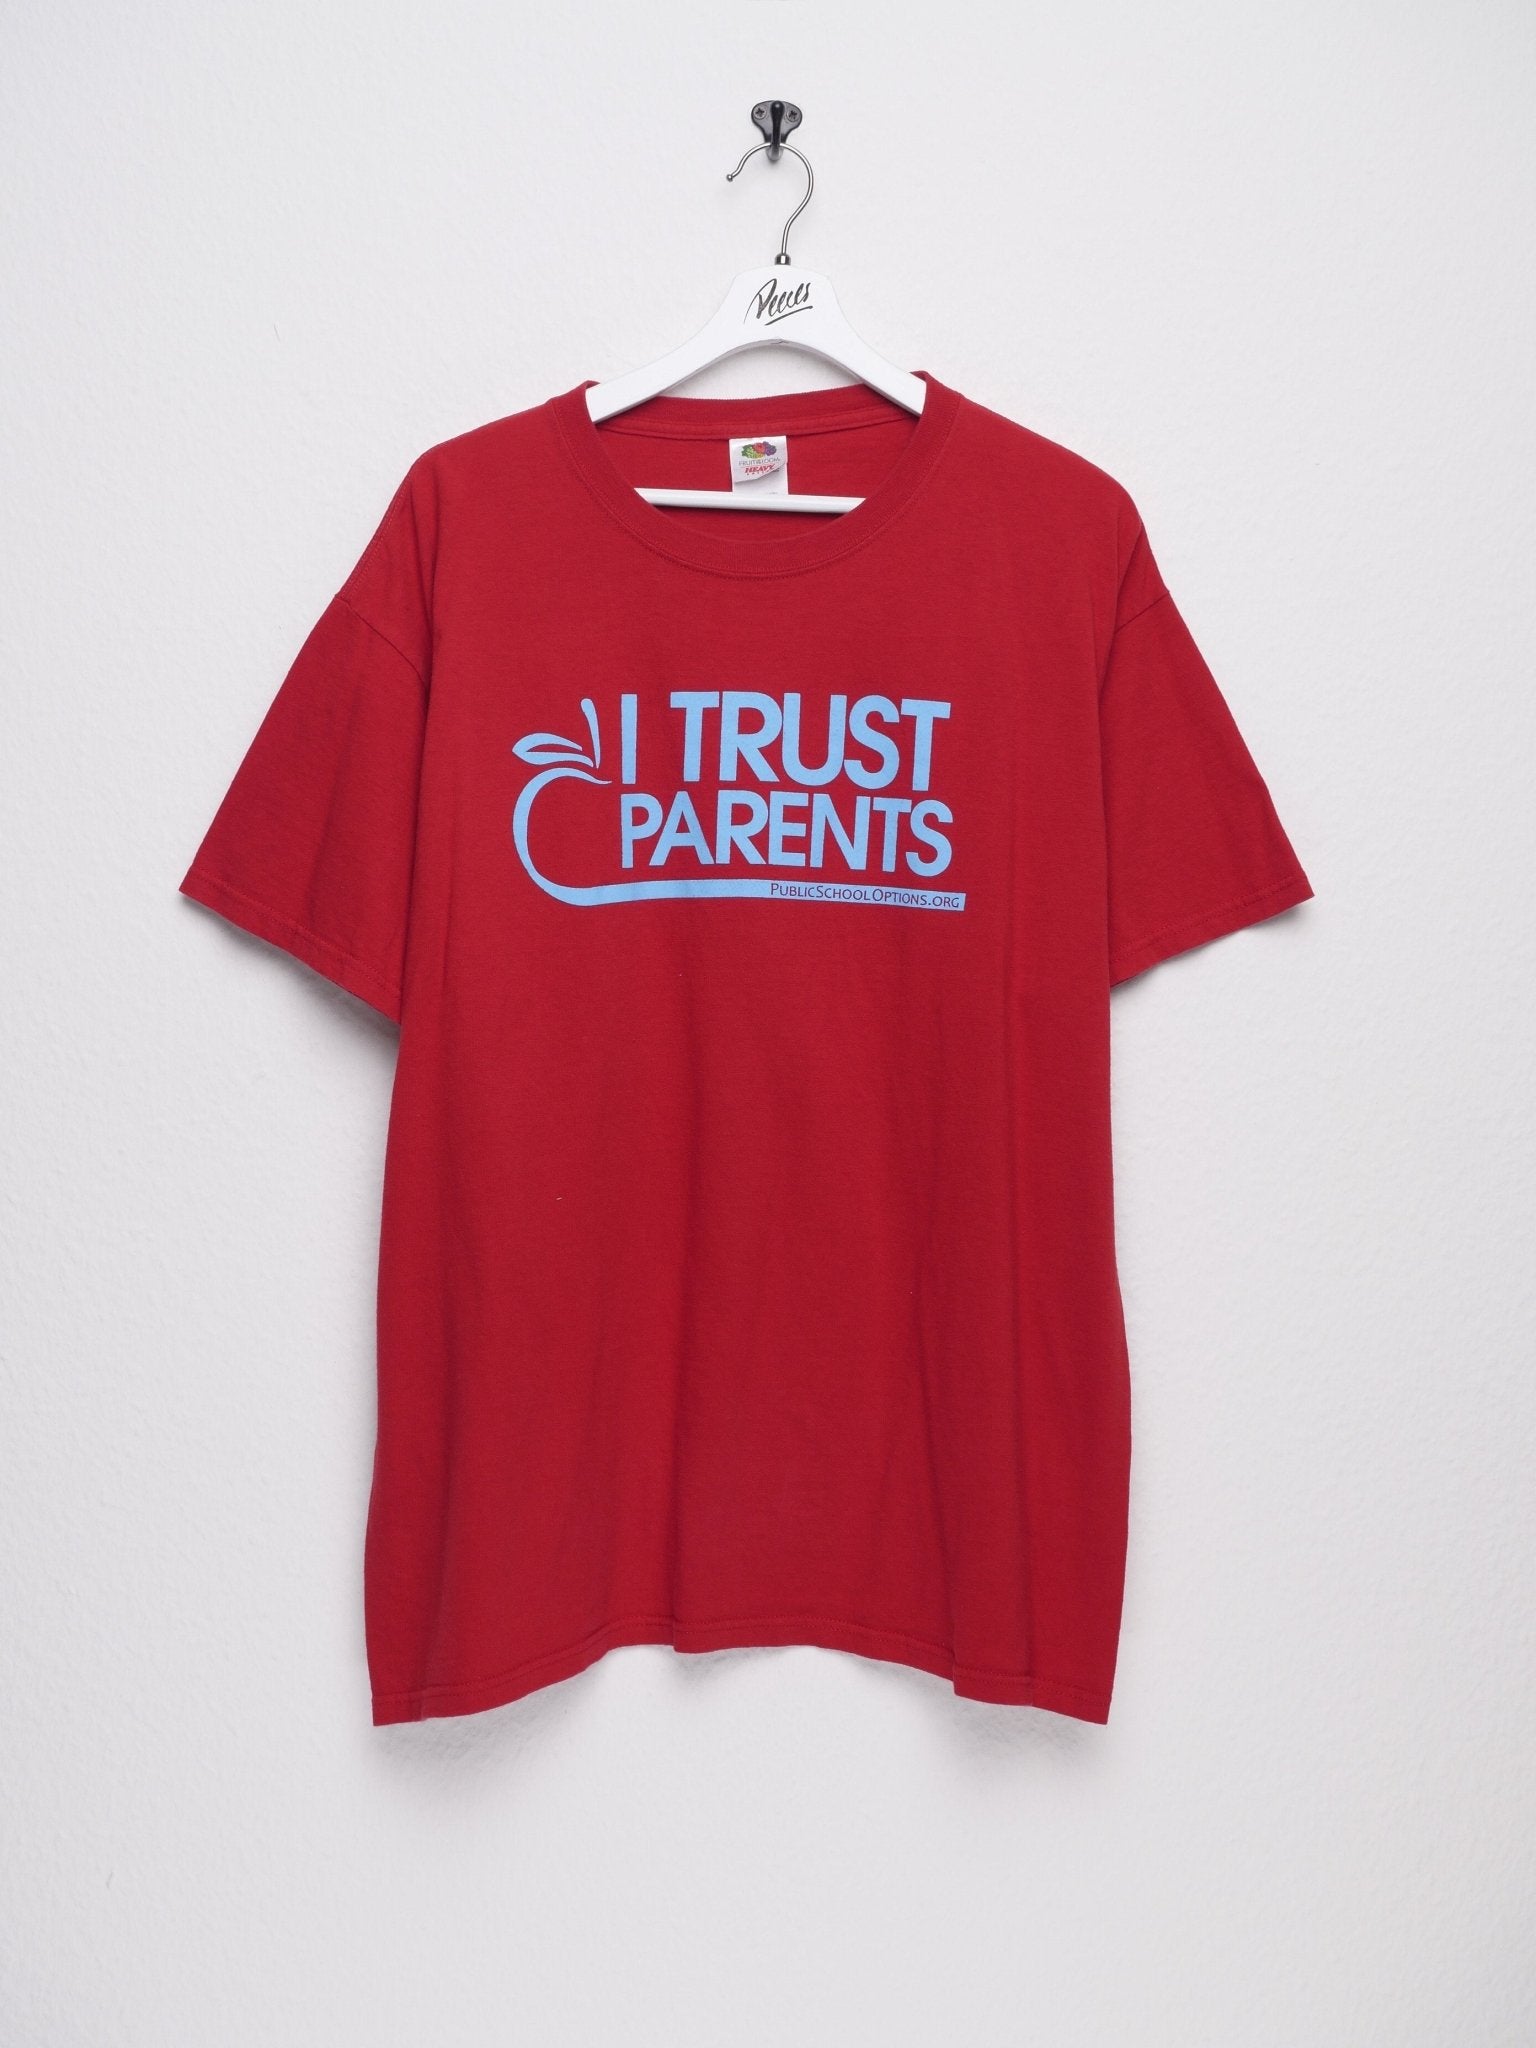 printed 'Trust Parents' red Shirt - Peeces